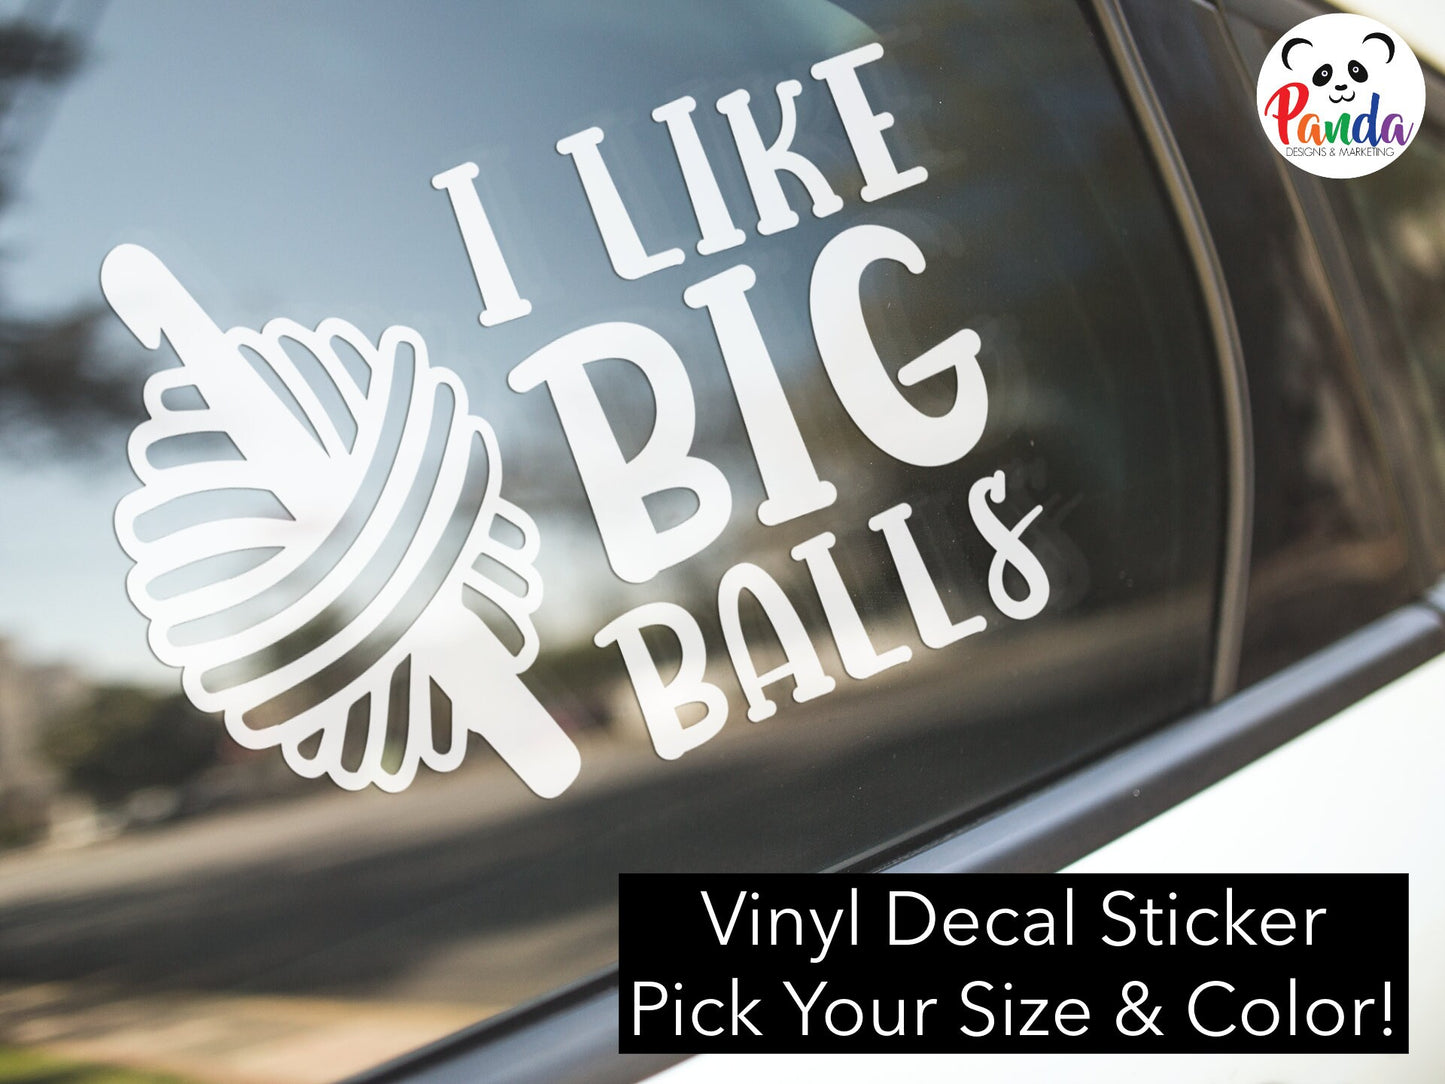 I like big balls (of yarn) vinyl decal sticker. Crochet horizontal layout.